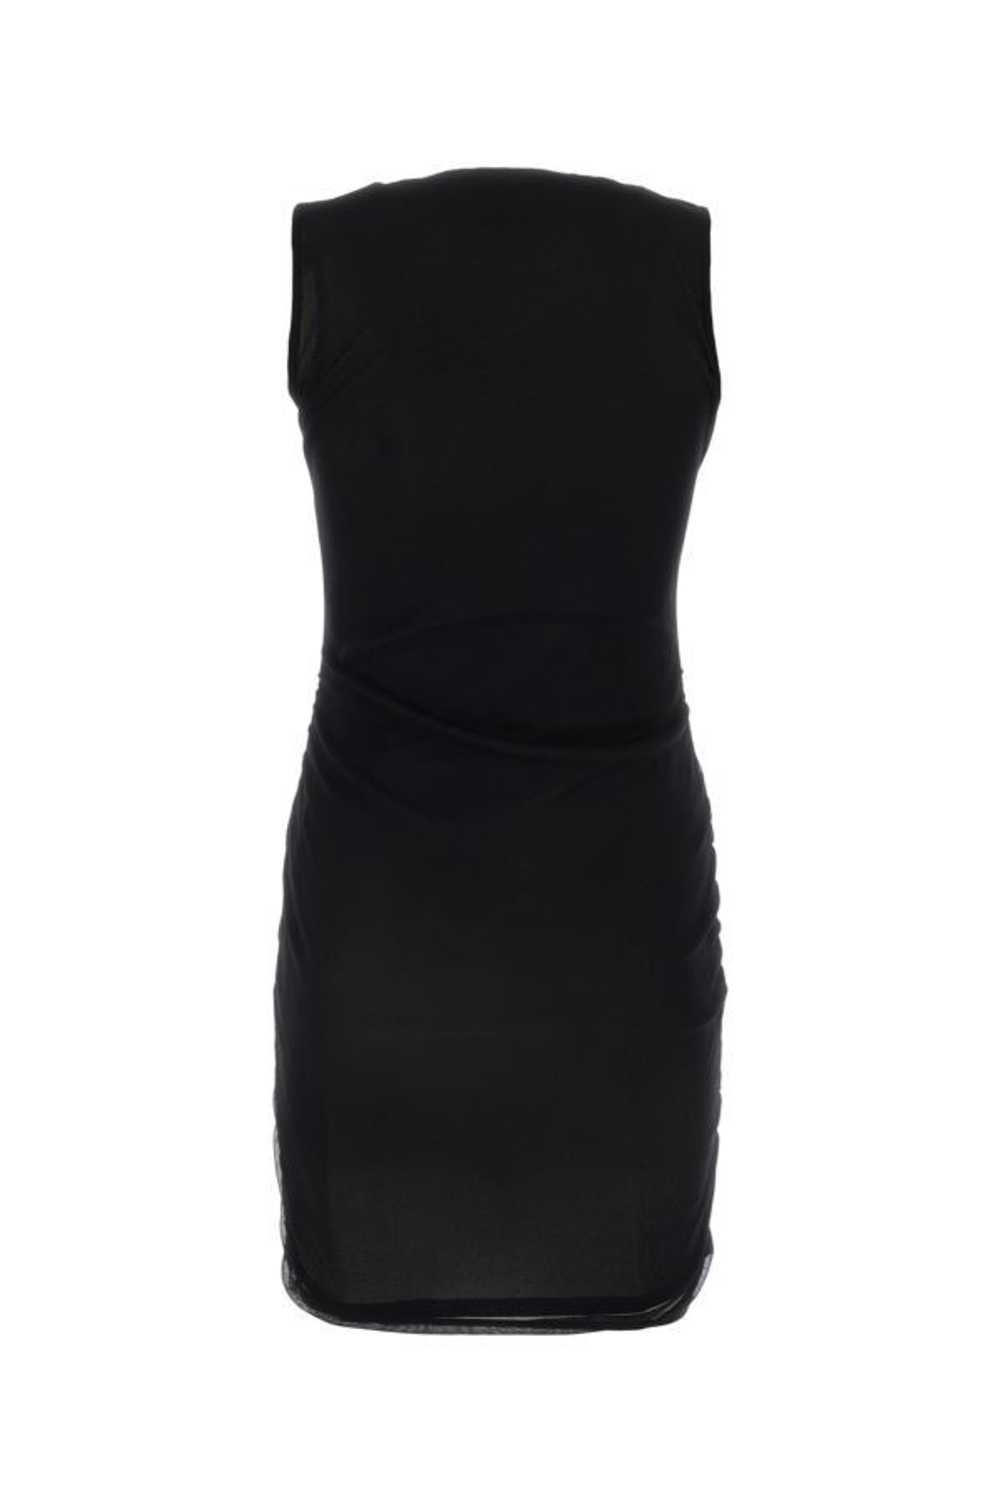 Saint Laurent Paris Black Nylon Mini Dress - image 4